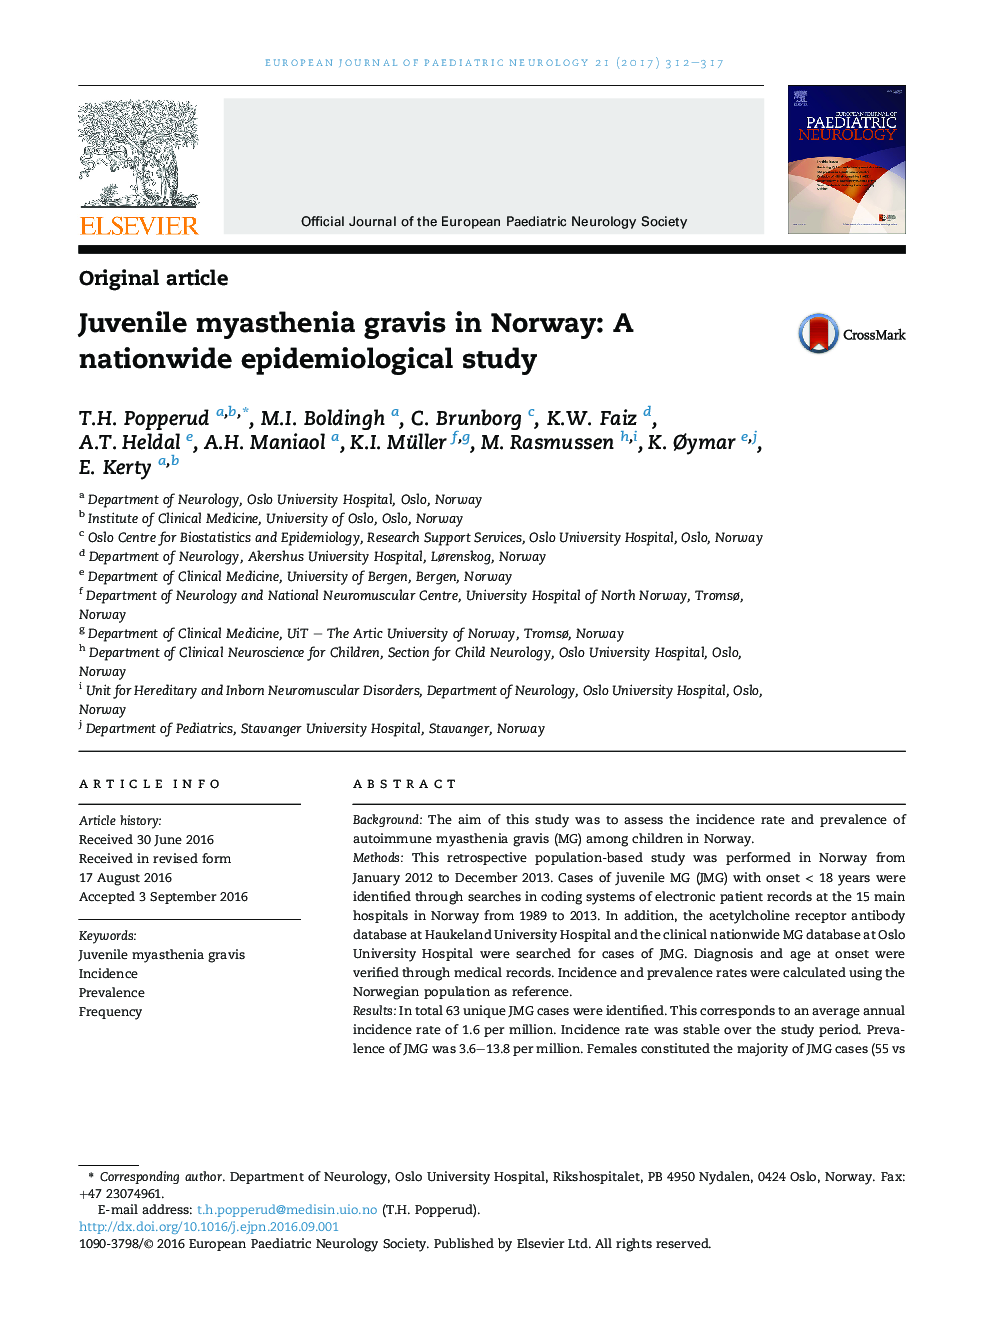 Original articleJuvenile myasthenia gravis in Norway: A nationwide epidemiological study